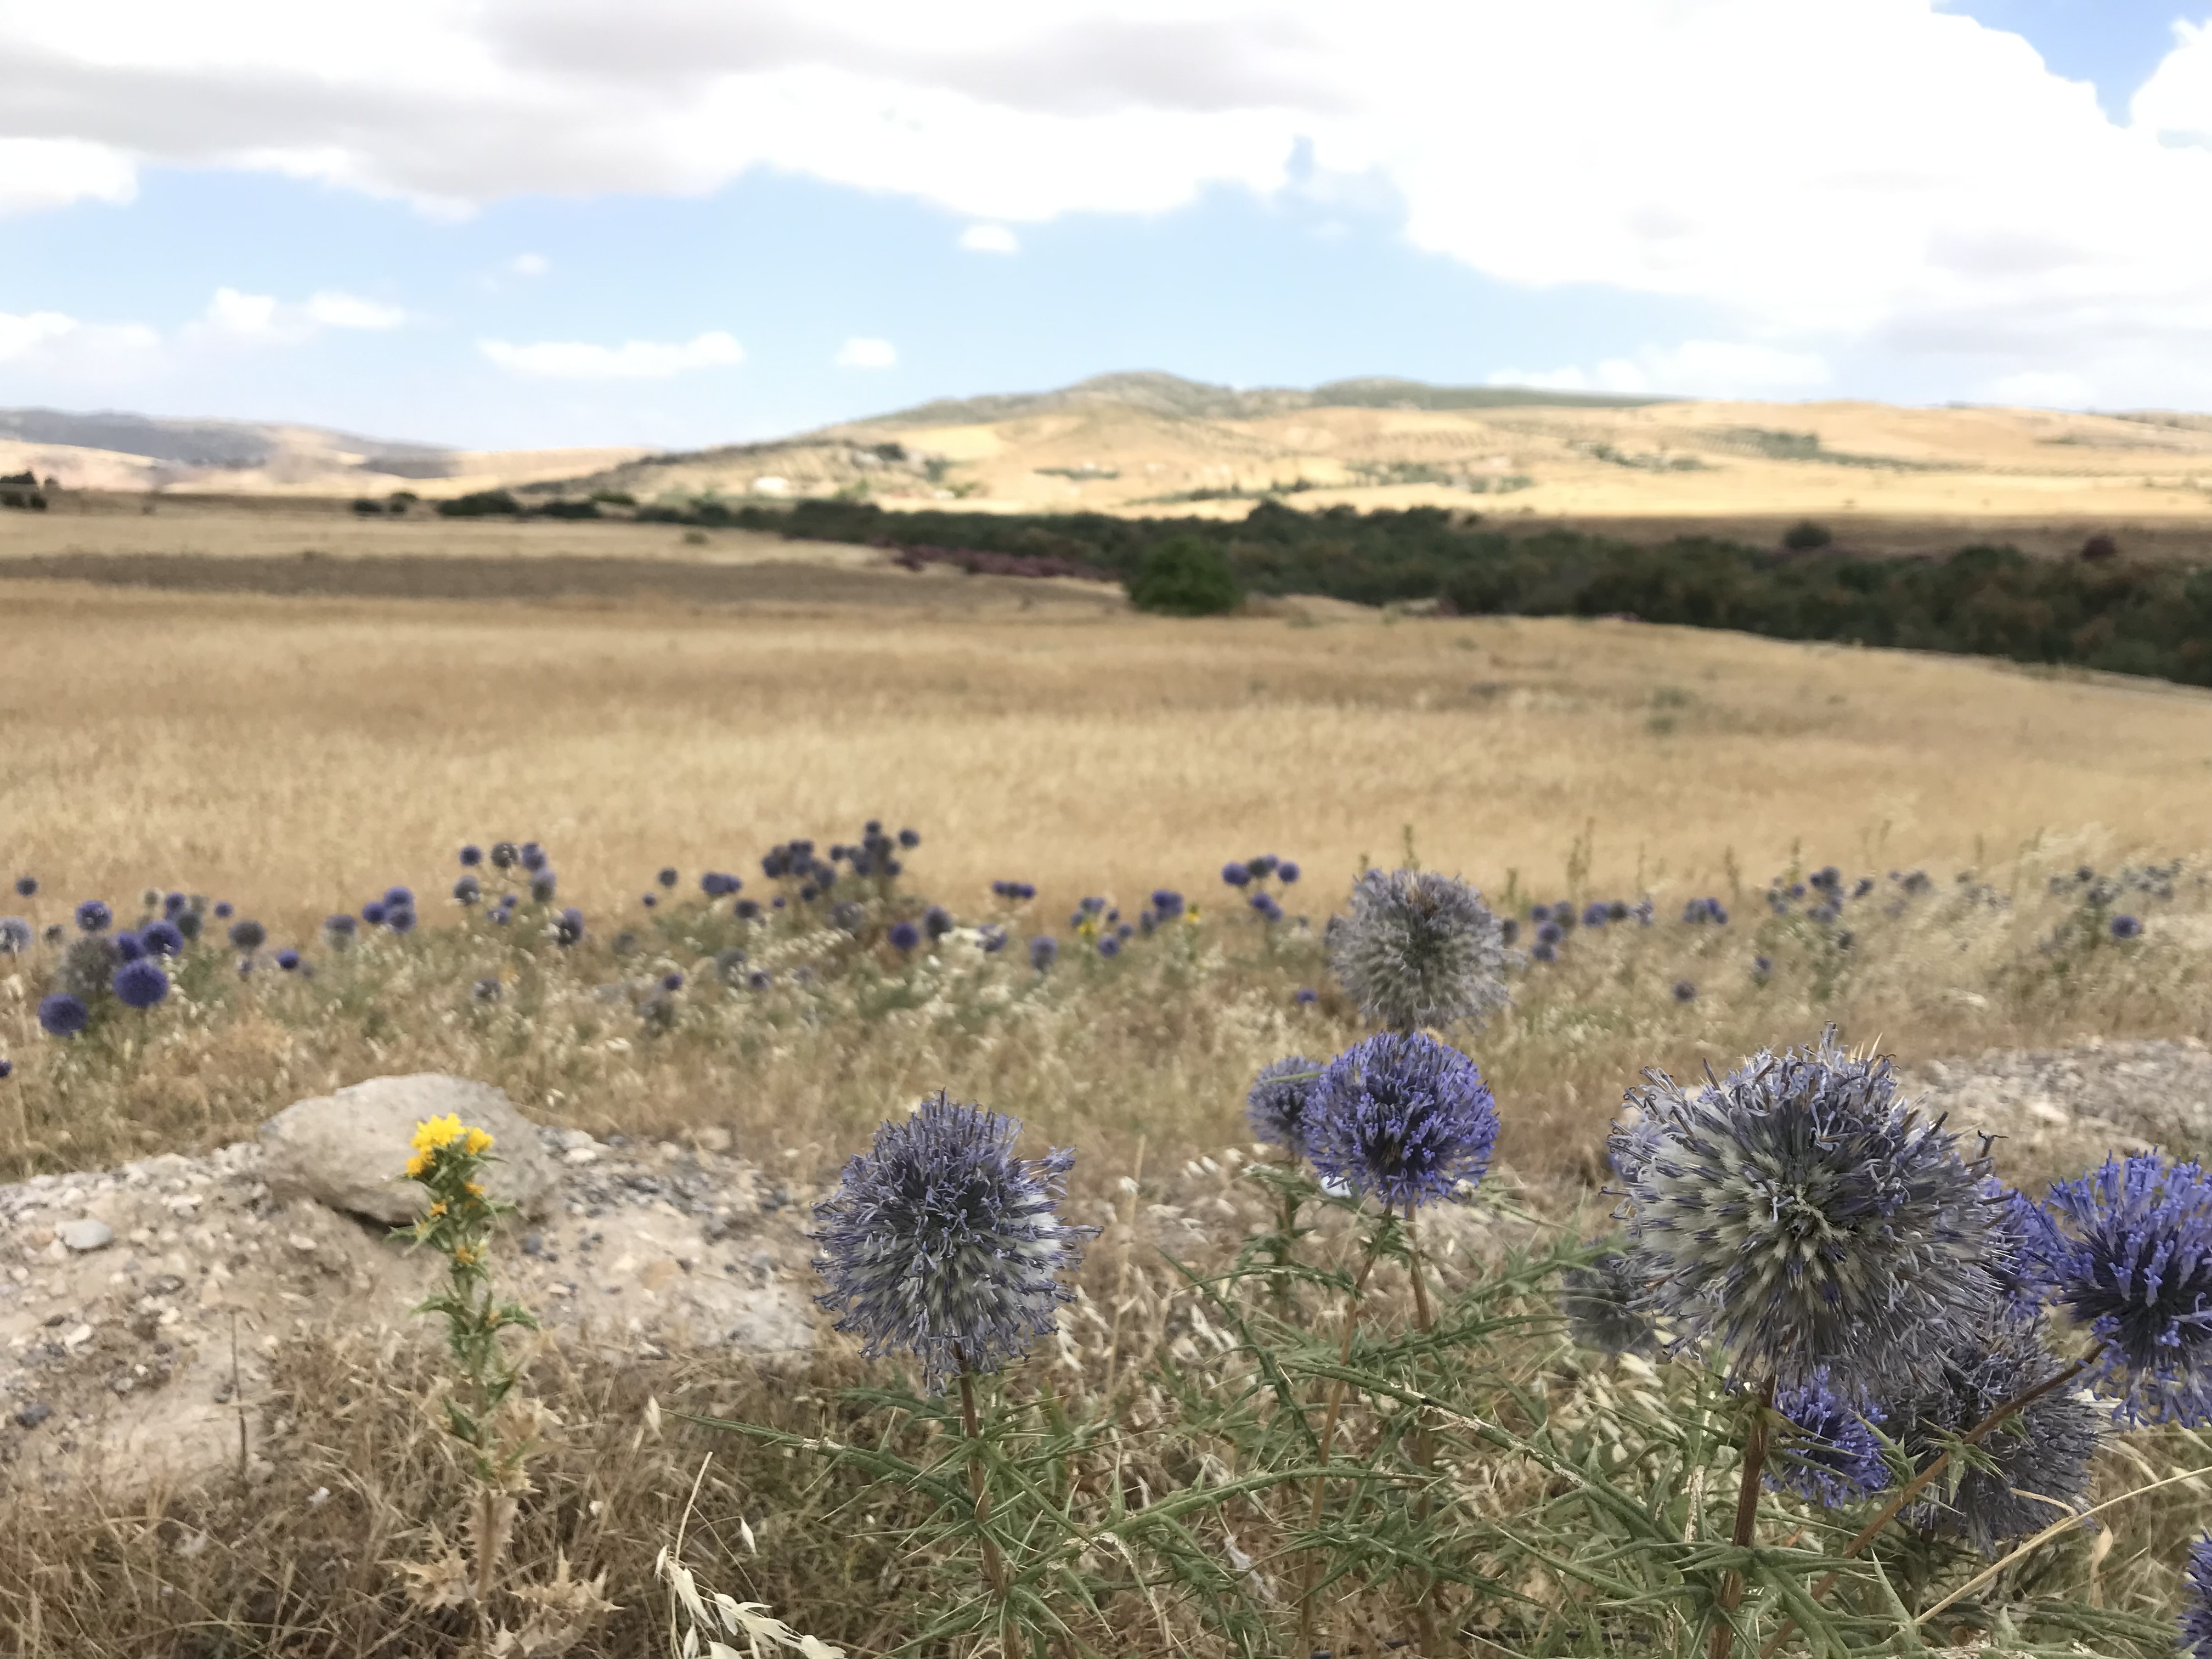 Echinops flowering in an agricultural landscape, Dyr el Kef, Tunisia